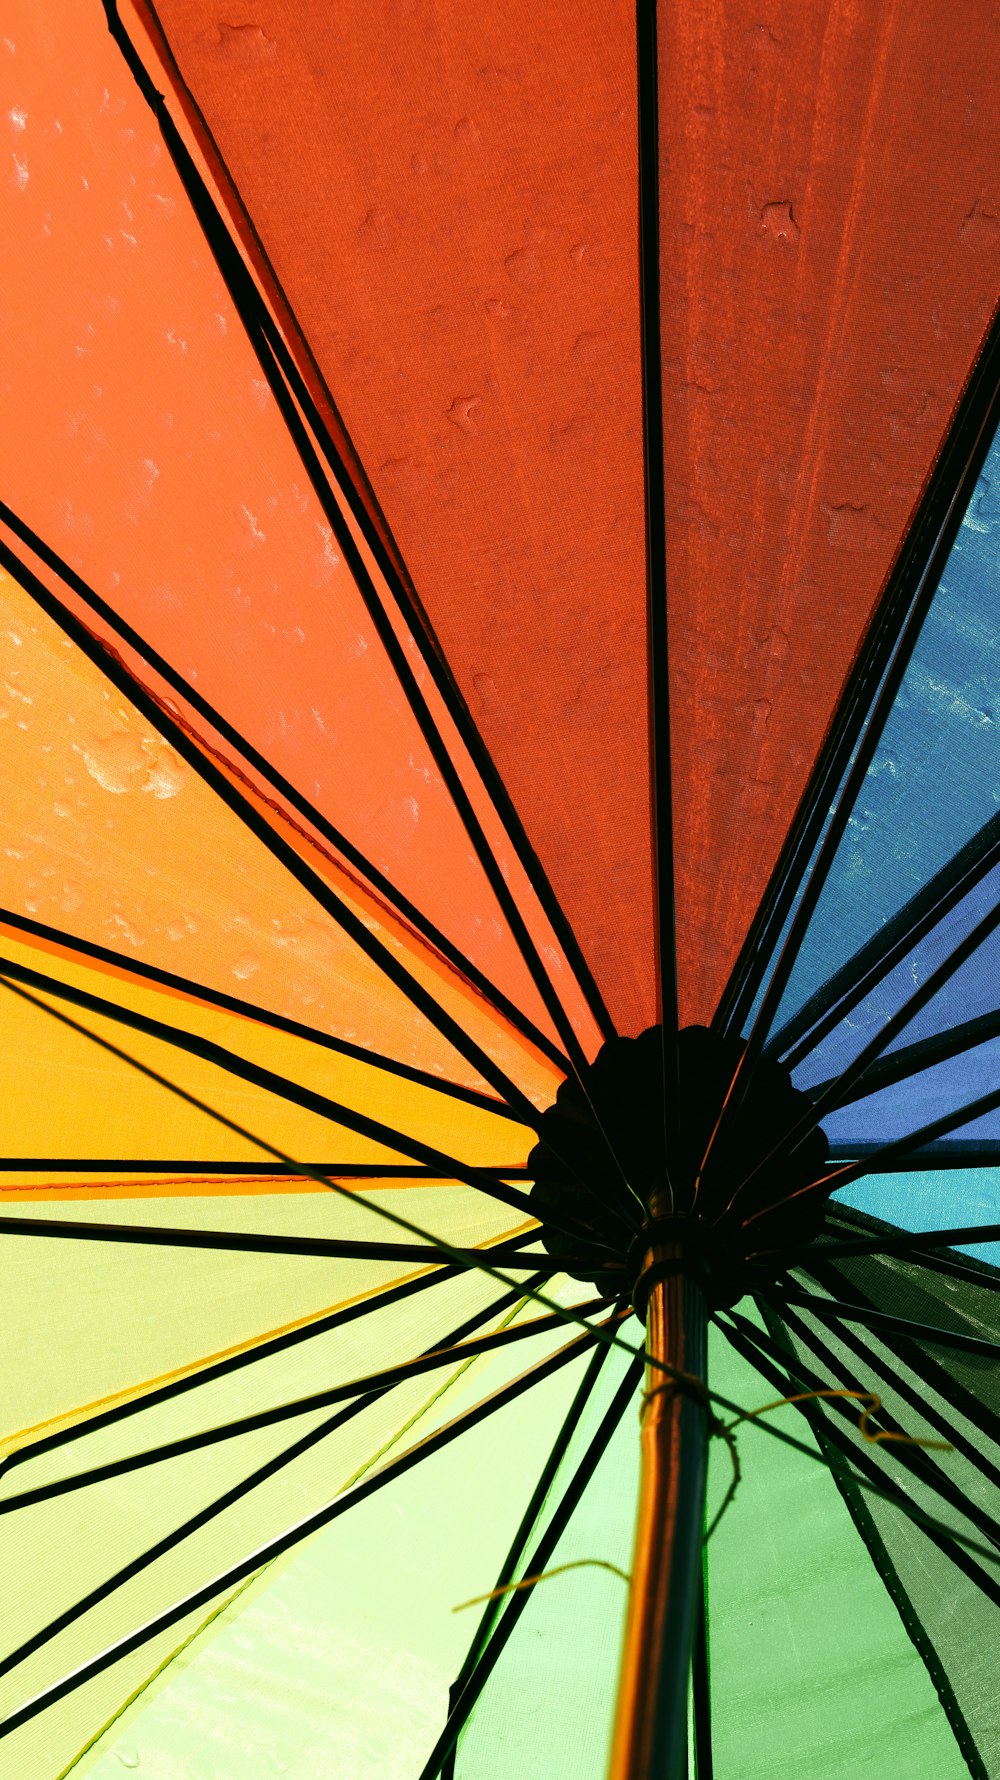 a close up of a multi colored umbrella